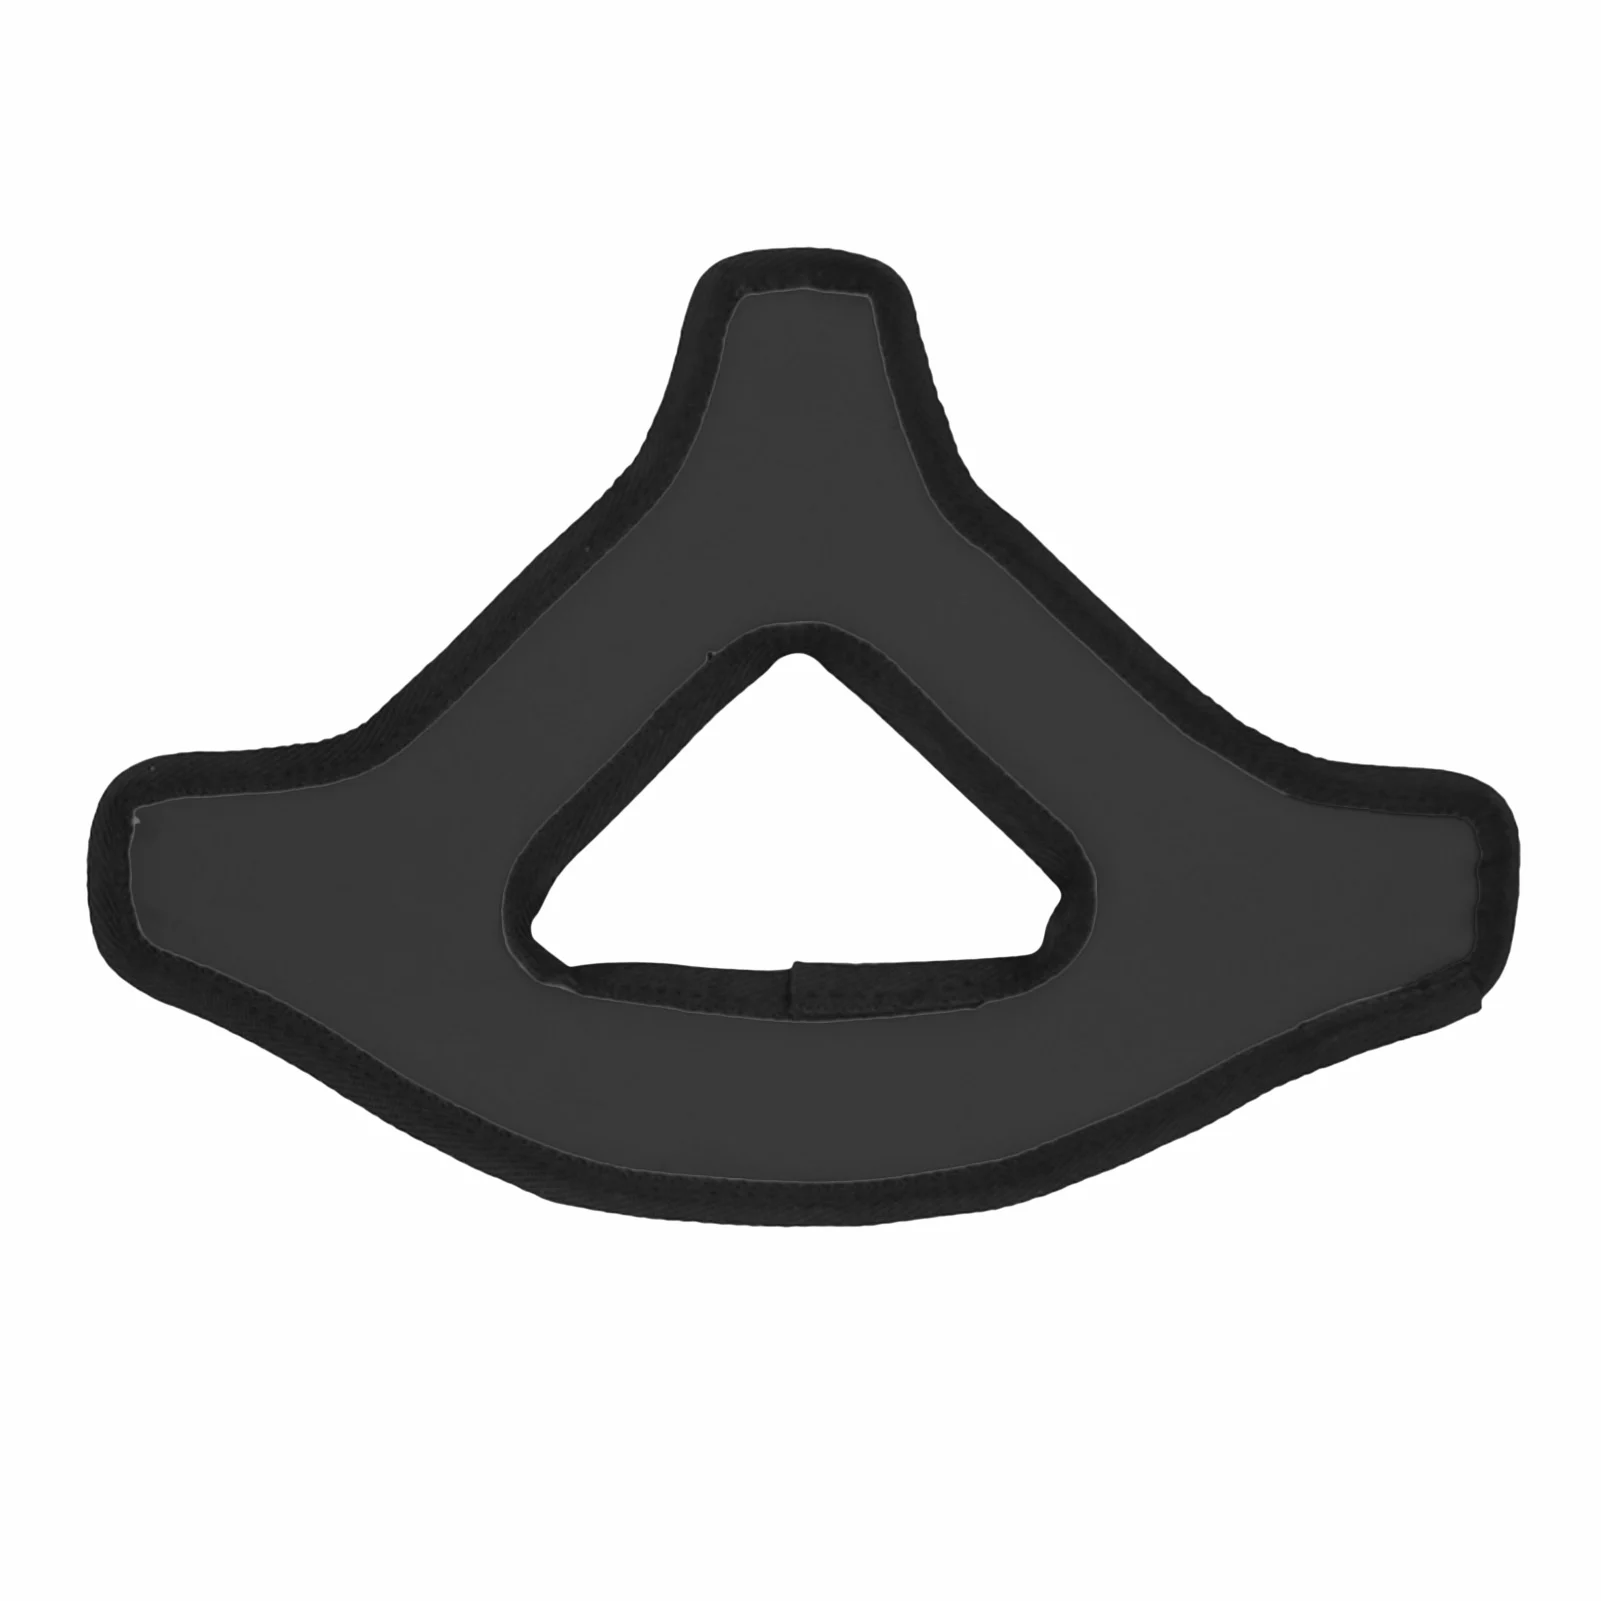 New Anti-slip Head VR Strap Pad For Oculus Quest 2 Breathable Anti-sweat Pad Soft Cushion Headband Oculus Quest 2 Accessories 